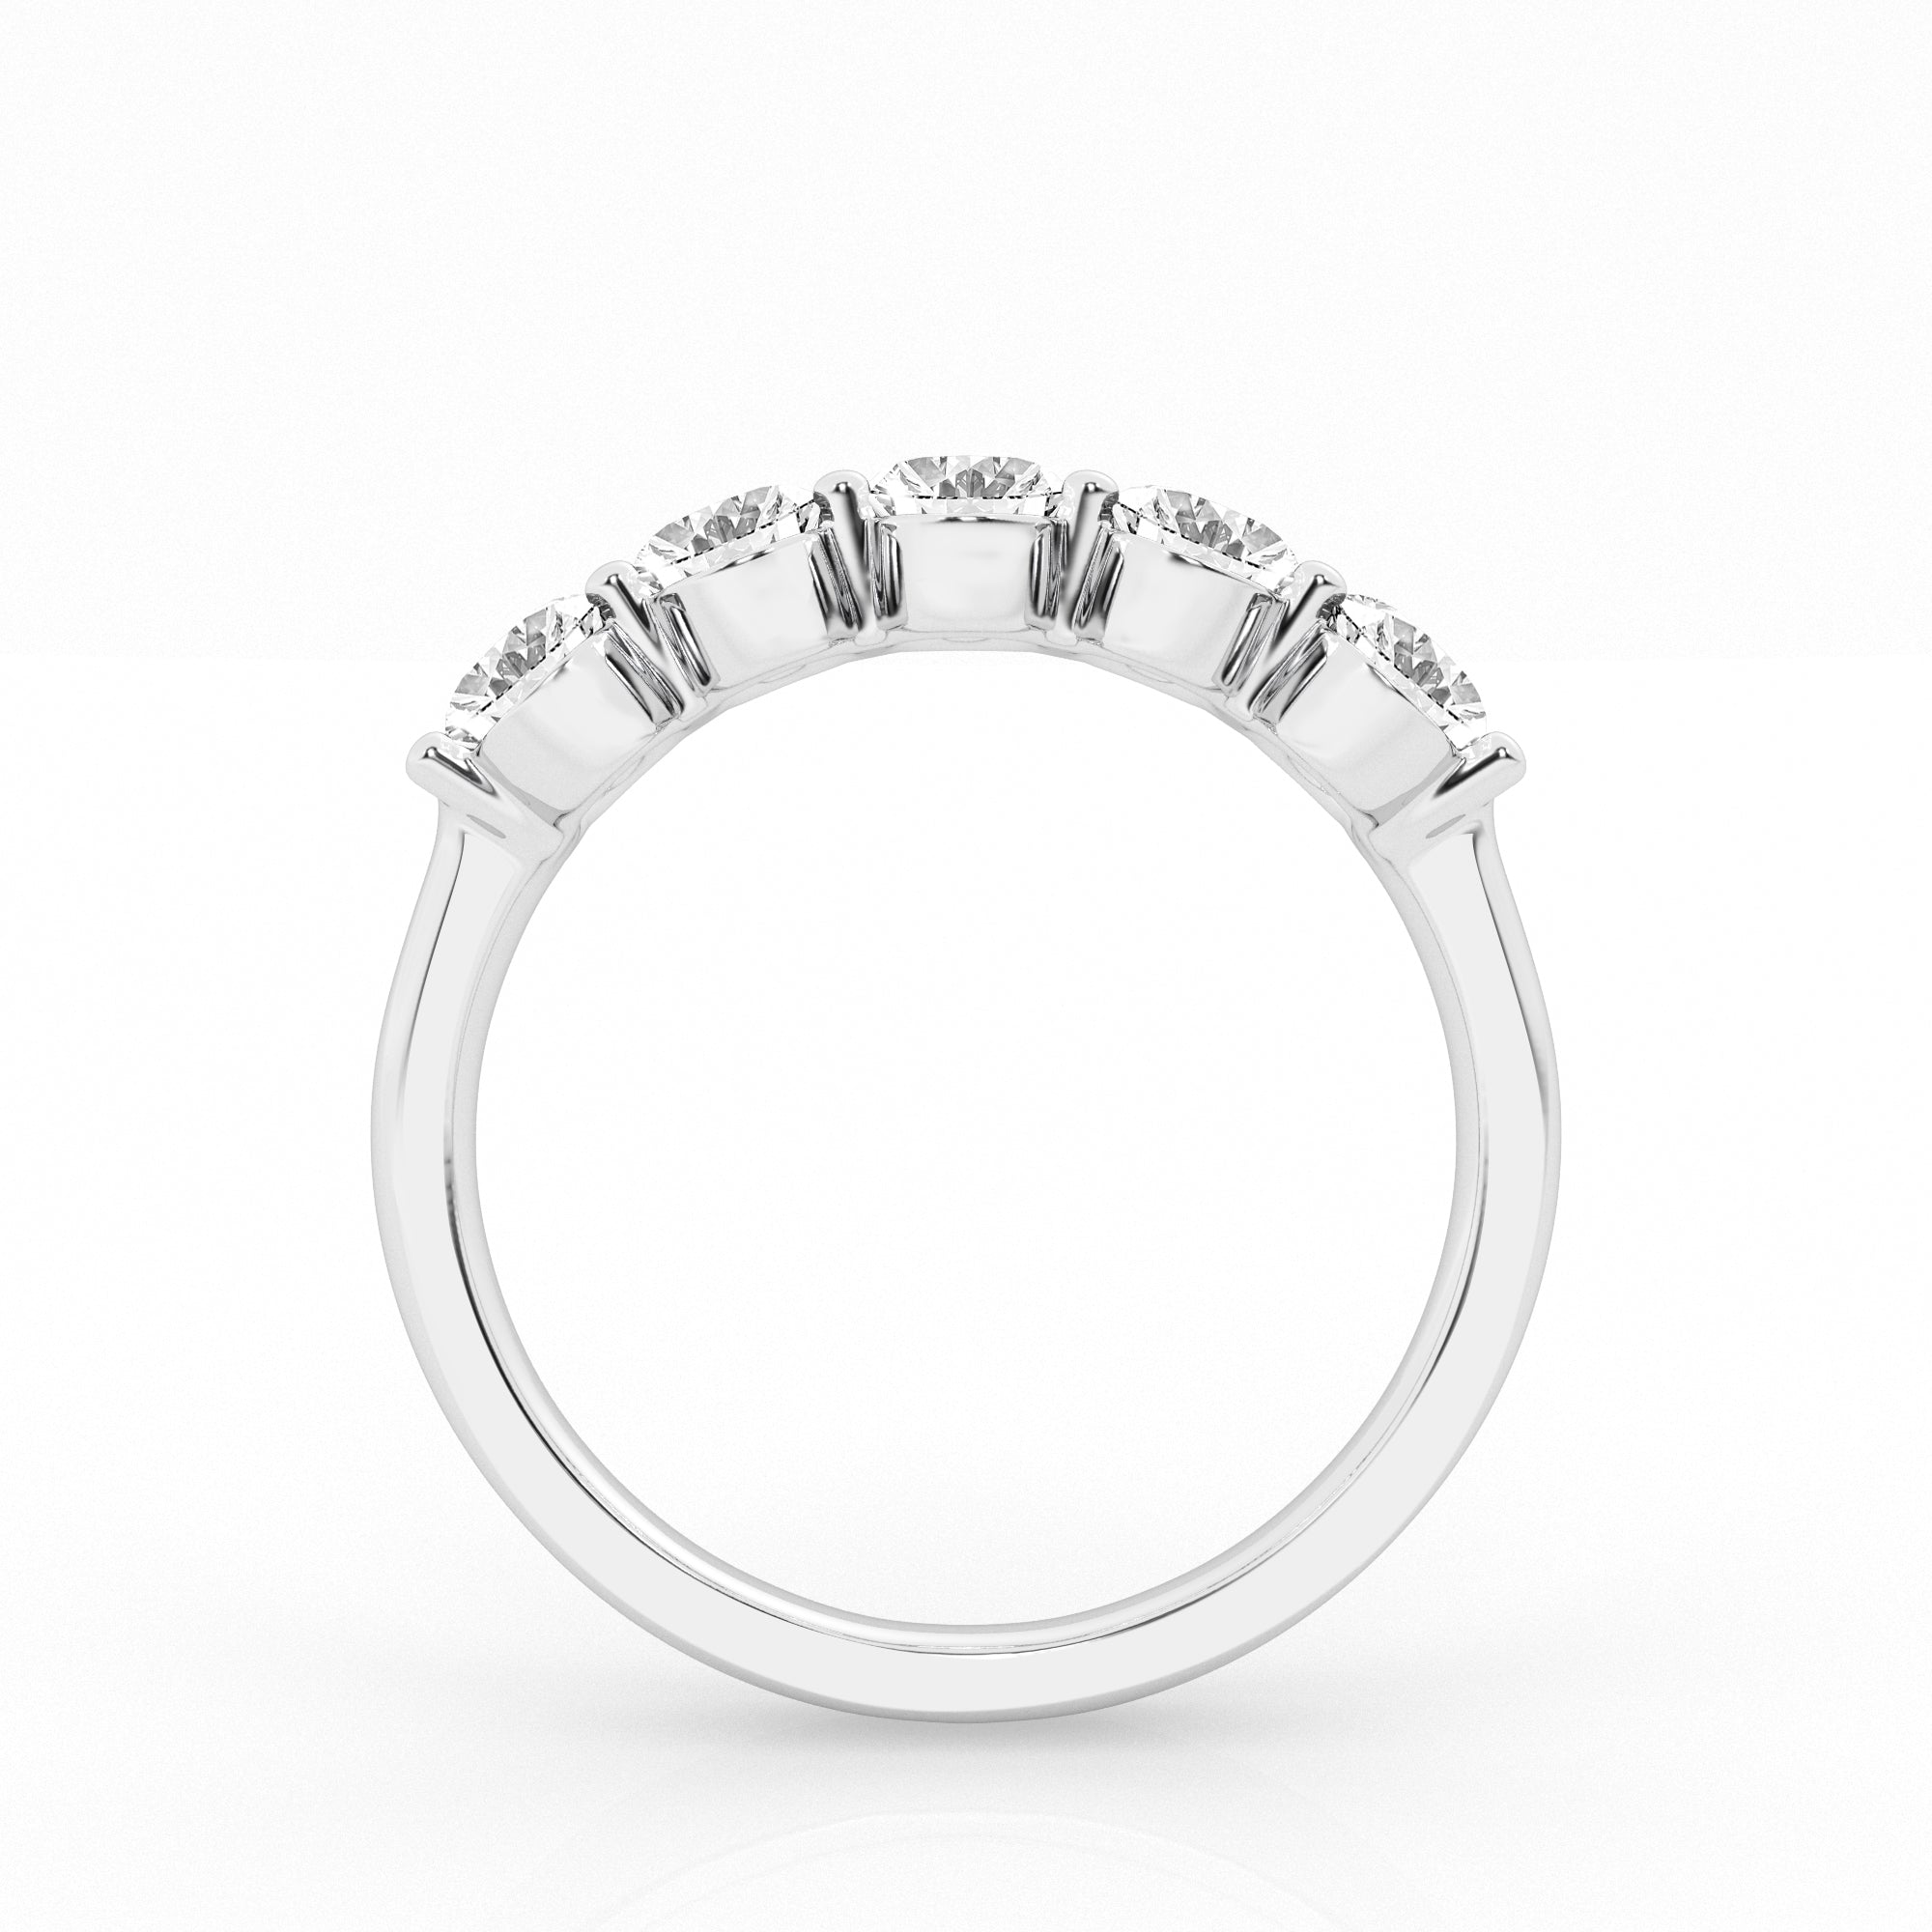 2 carat Oval Five Stone Diamond Ring